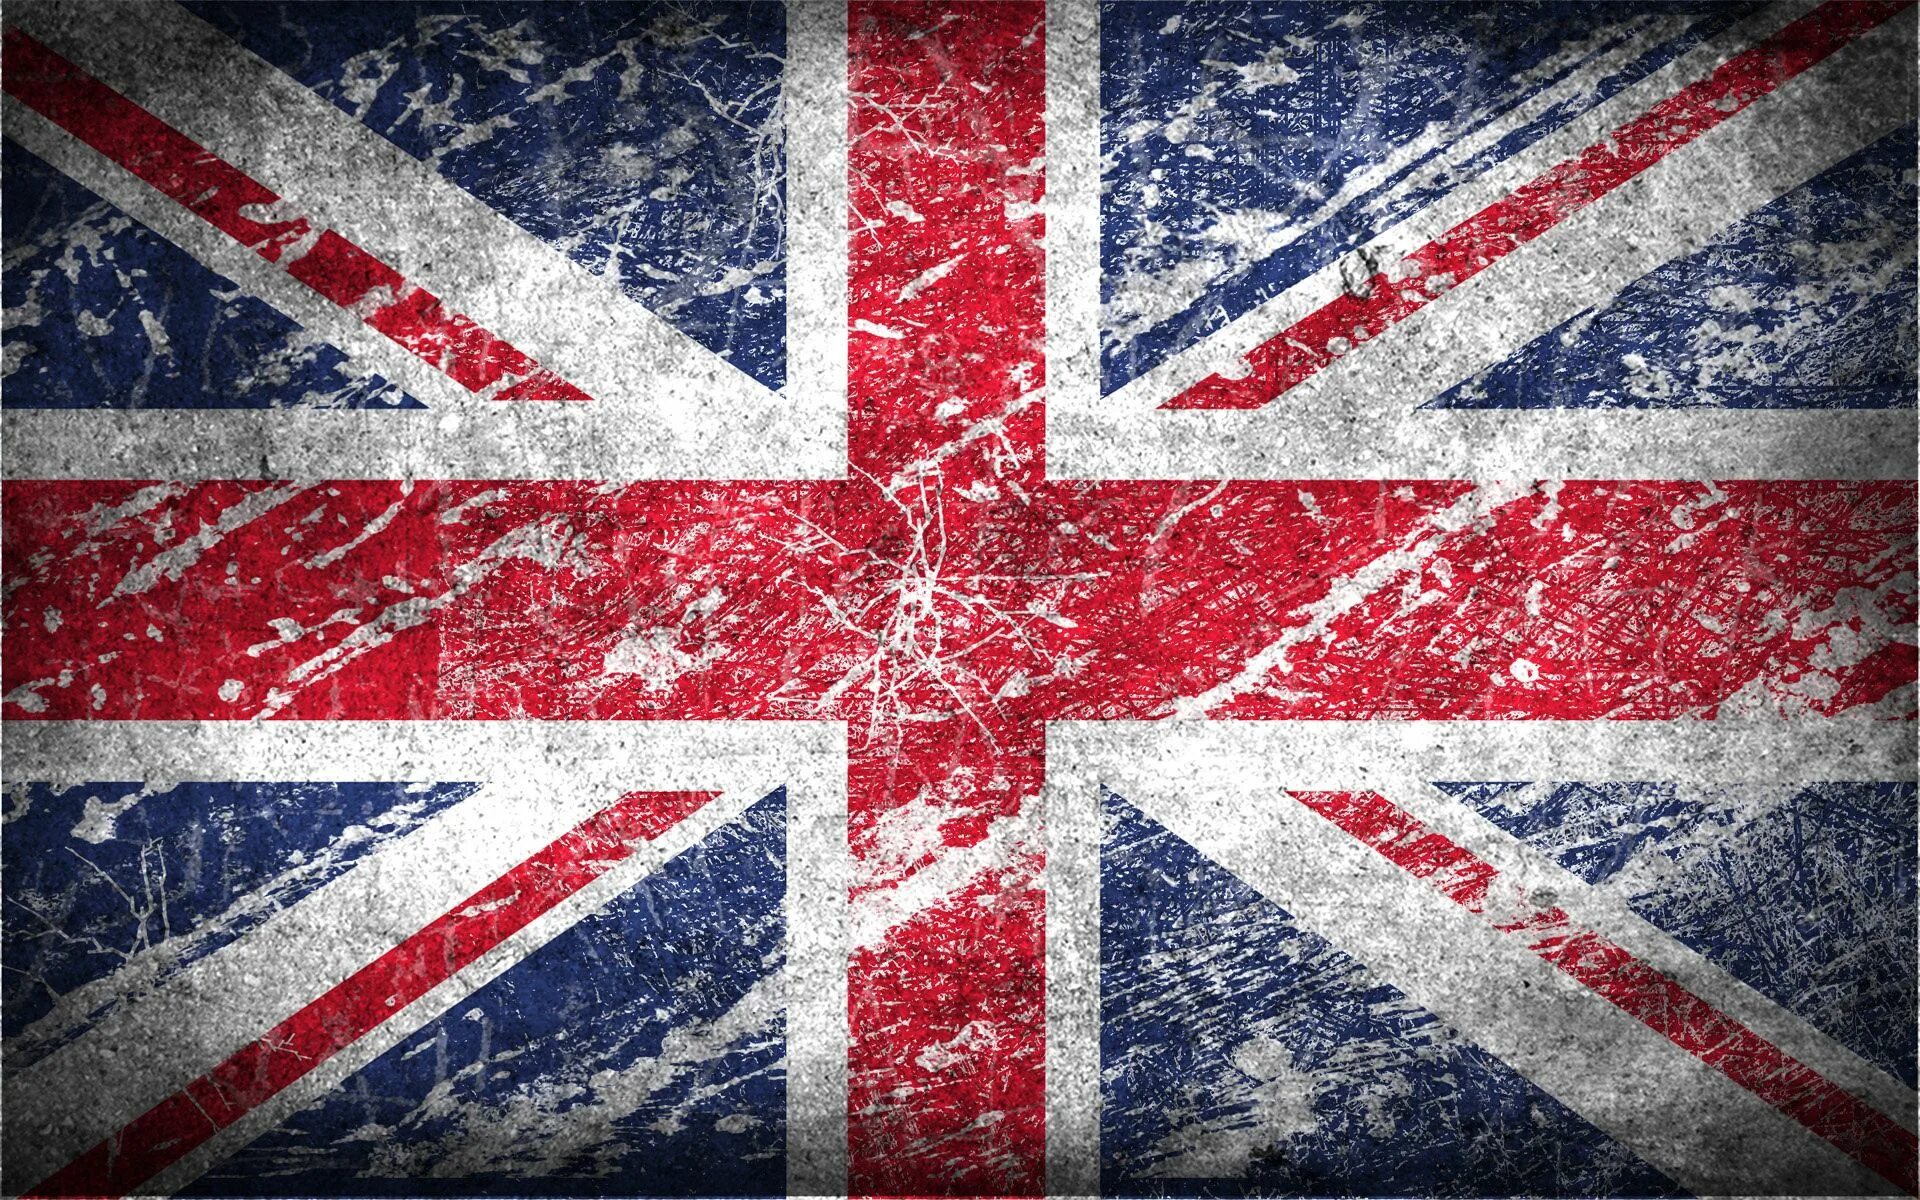 Тег великобритании. Флаг Англии и Великобритании. Юнион Джек флаг. Соединенное королевство флаг. Флаг Грейт Британ.